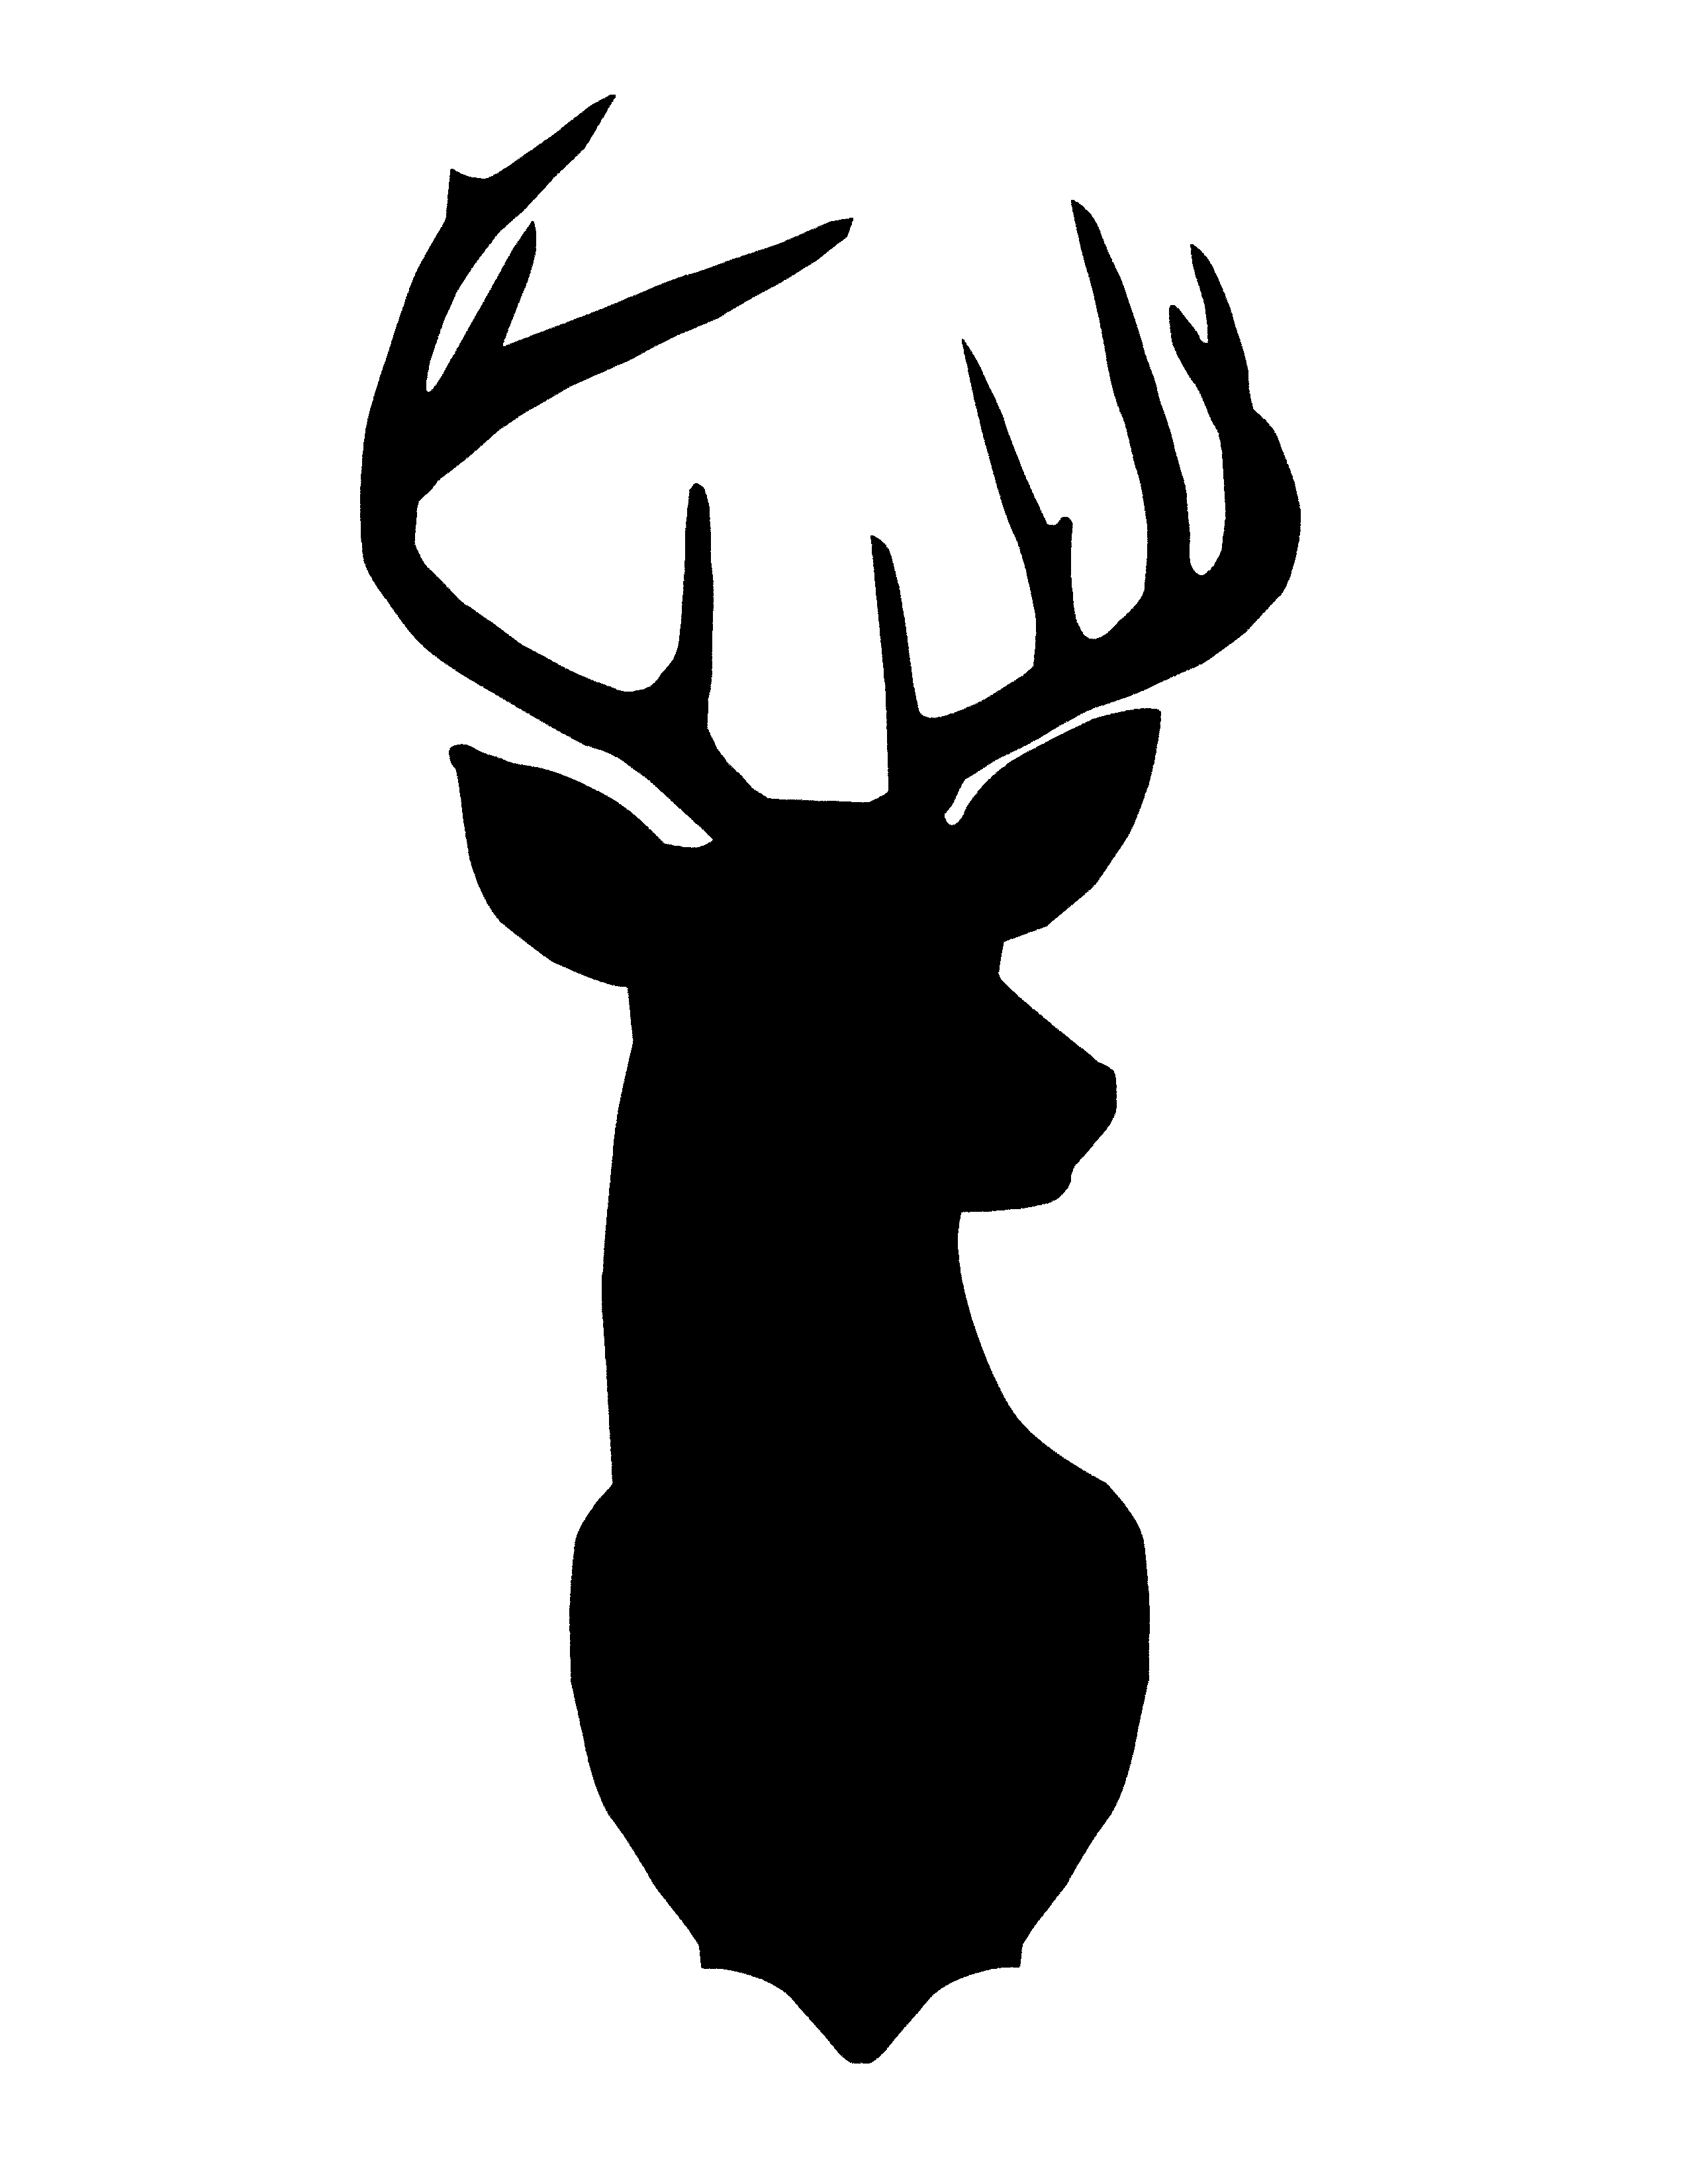 Deer silhouette logos clipart